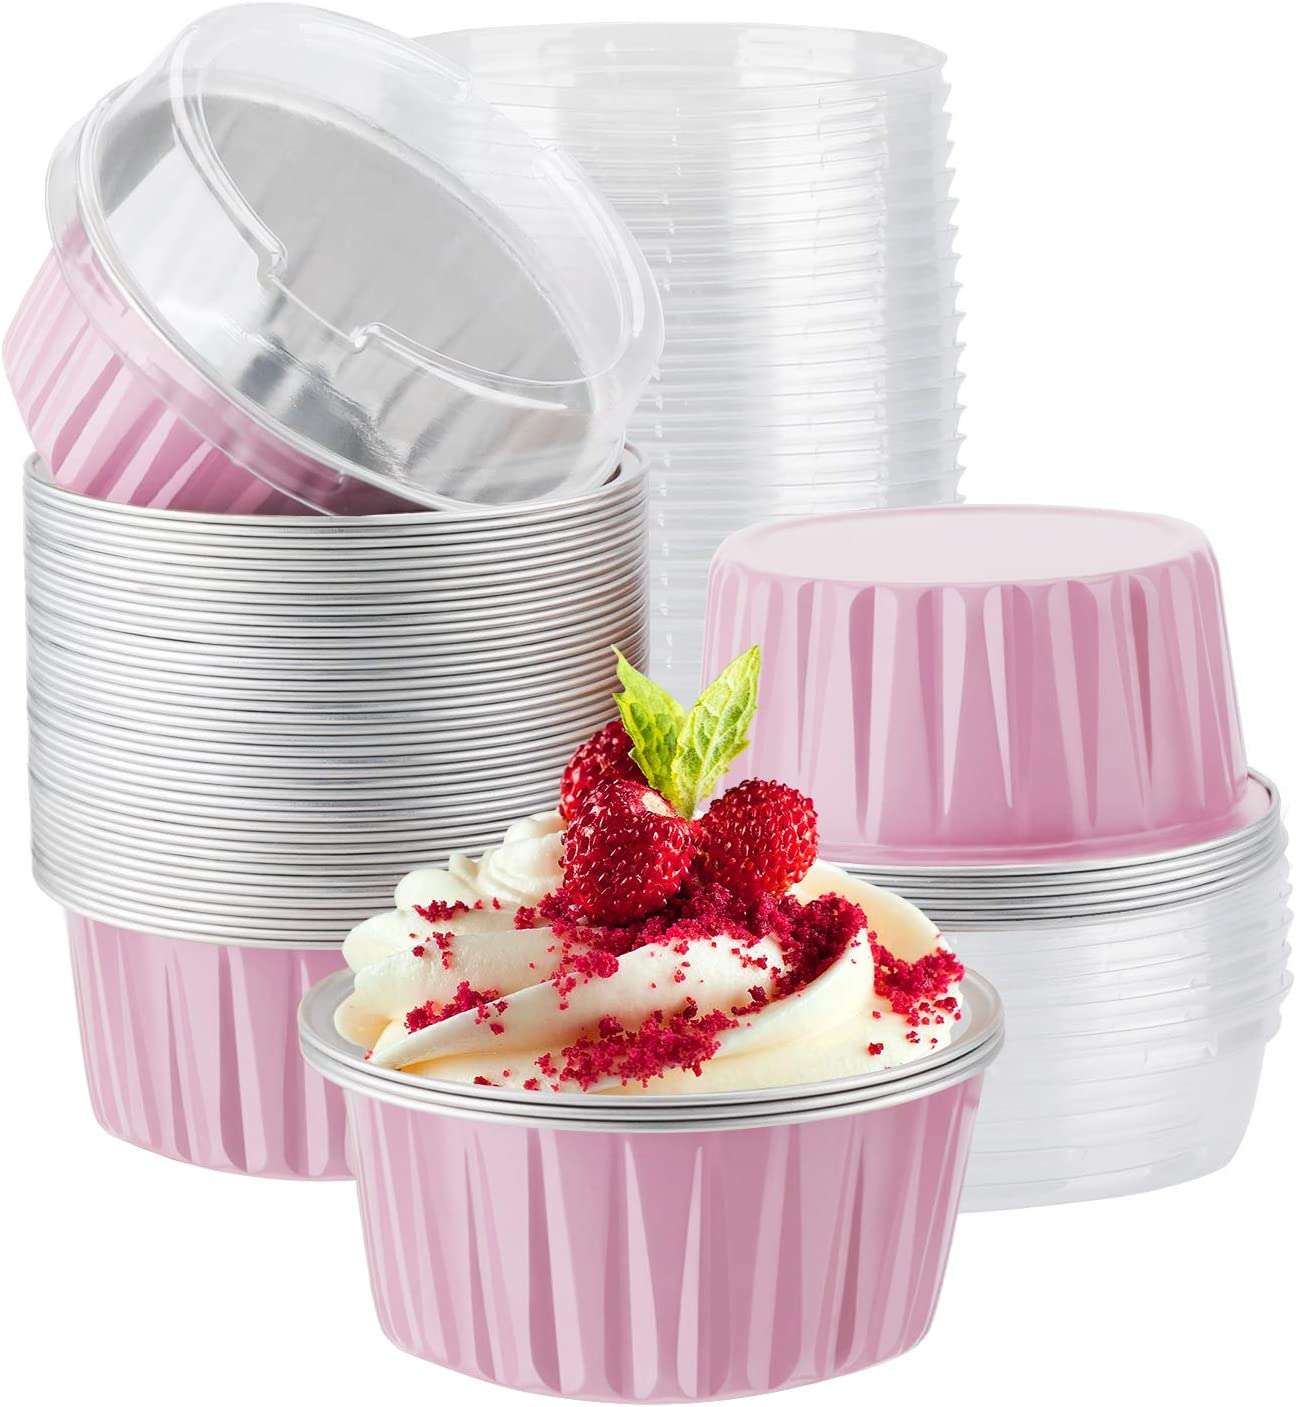 5. EUSOAR Reusable Muffin Cups